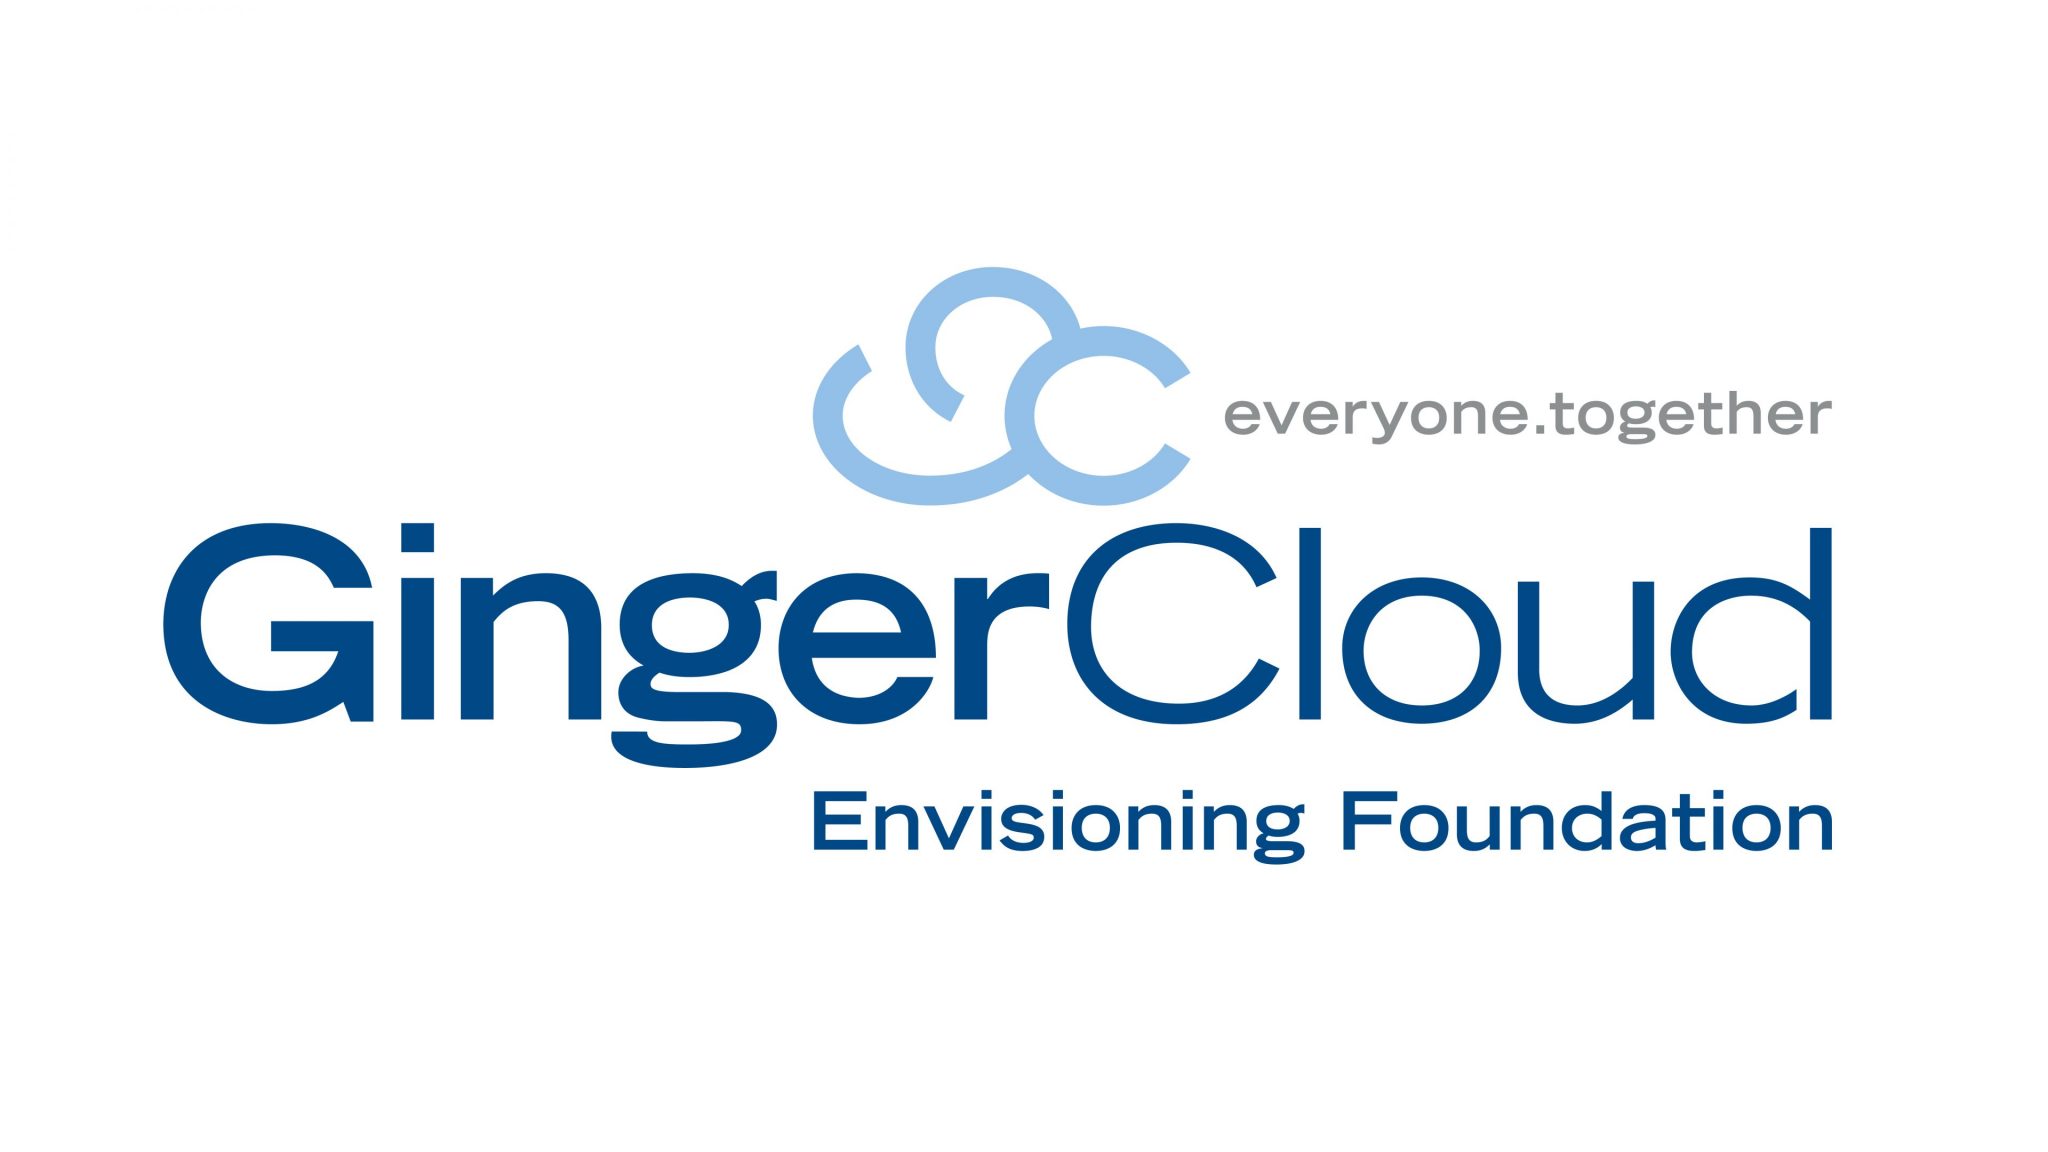 Gingercloud brand identity designed by Brisbane branding agency DAIS pro bono project